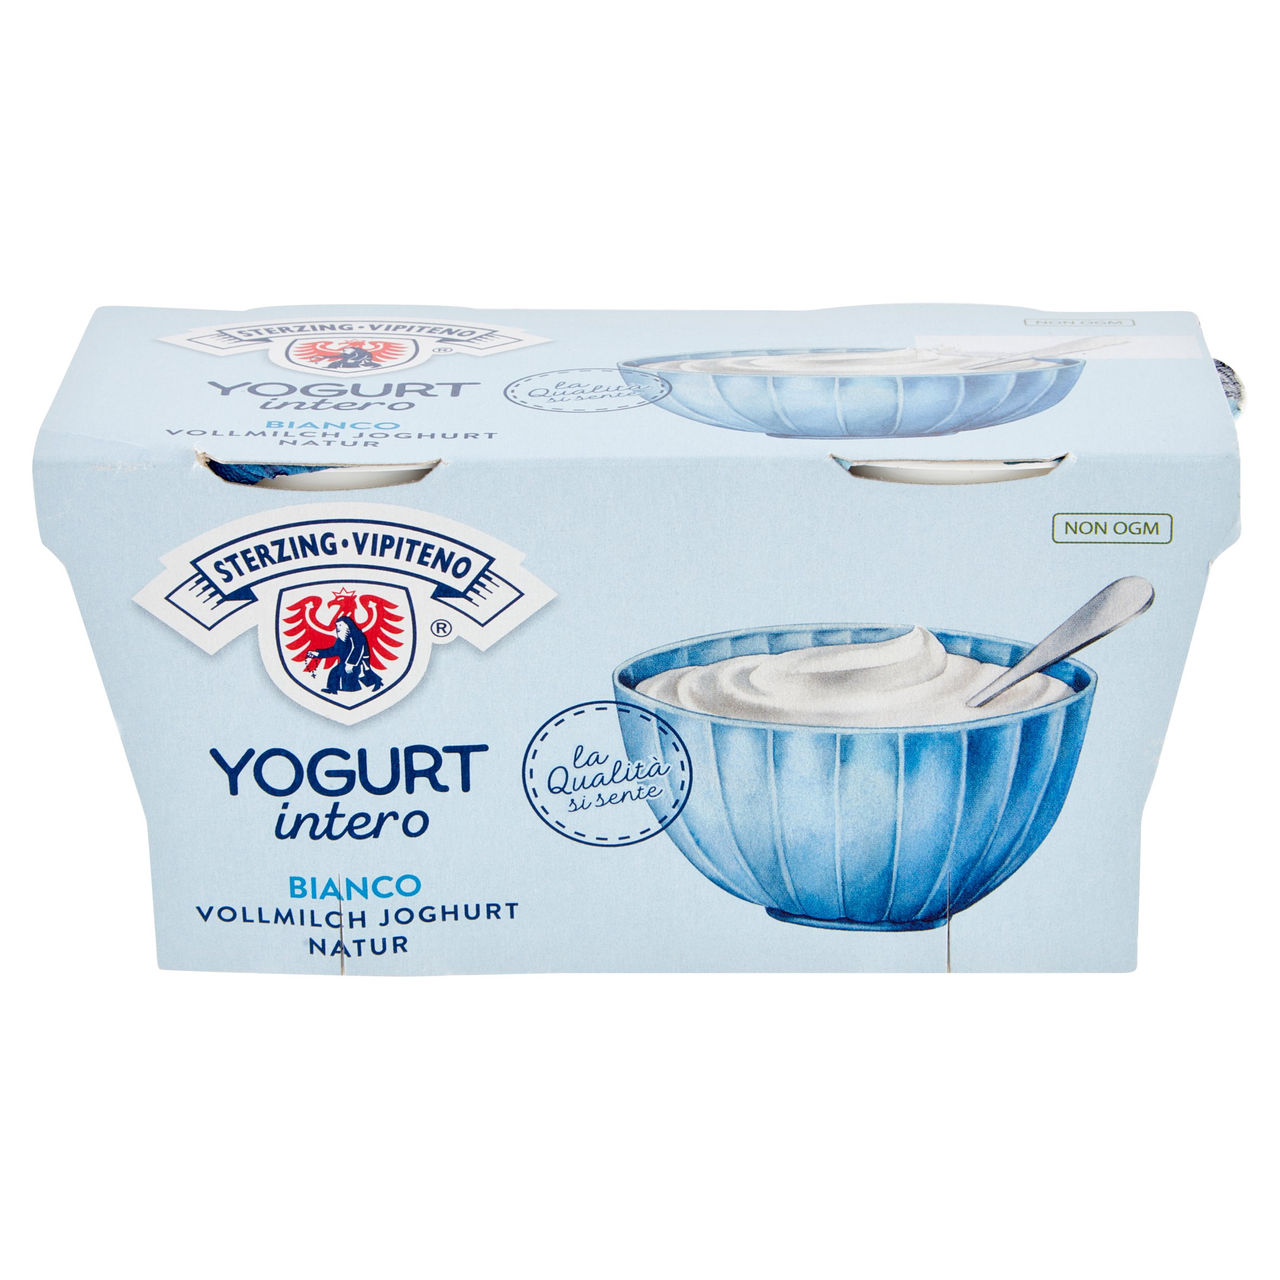 Sterzing Vipiteno Yogurt Intero in vendita online